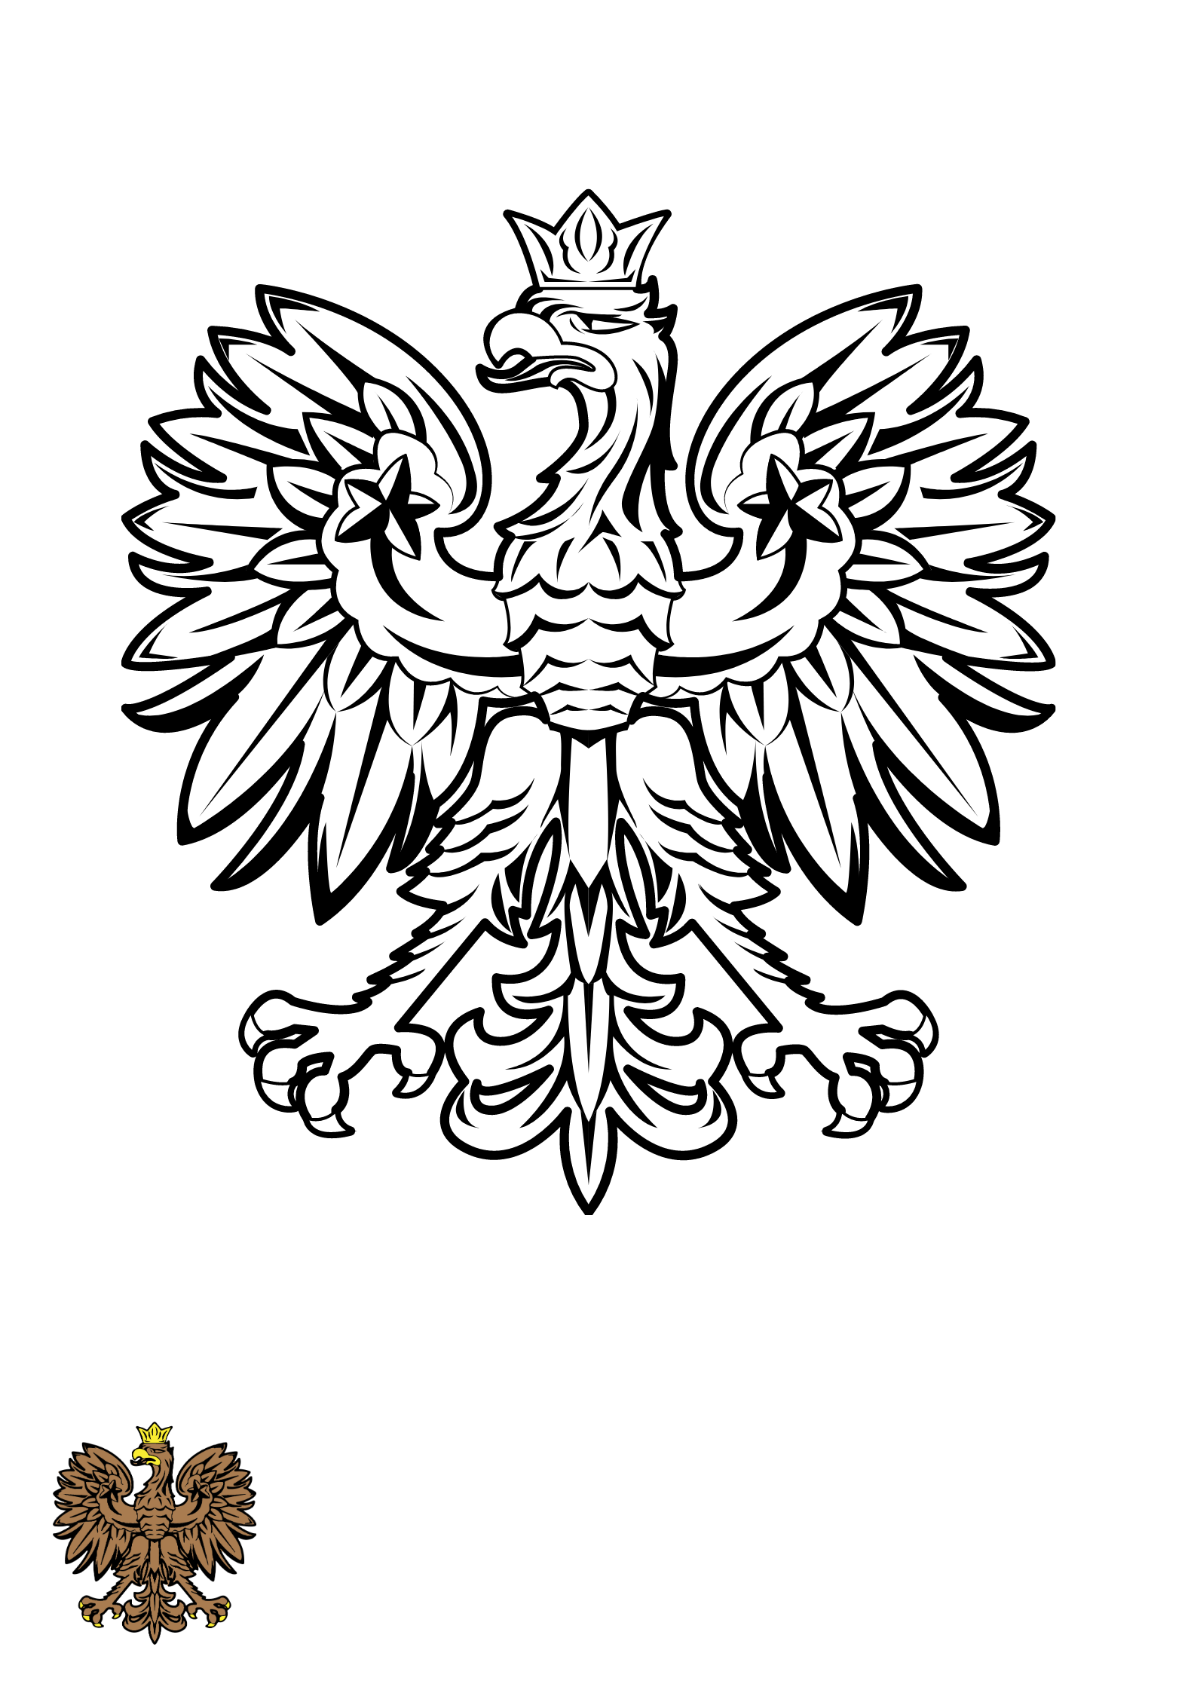 Polish Eagle coloring page Template